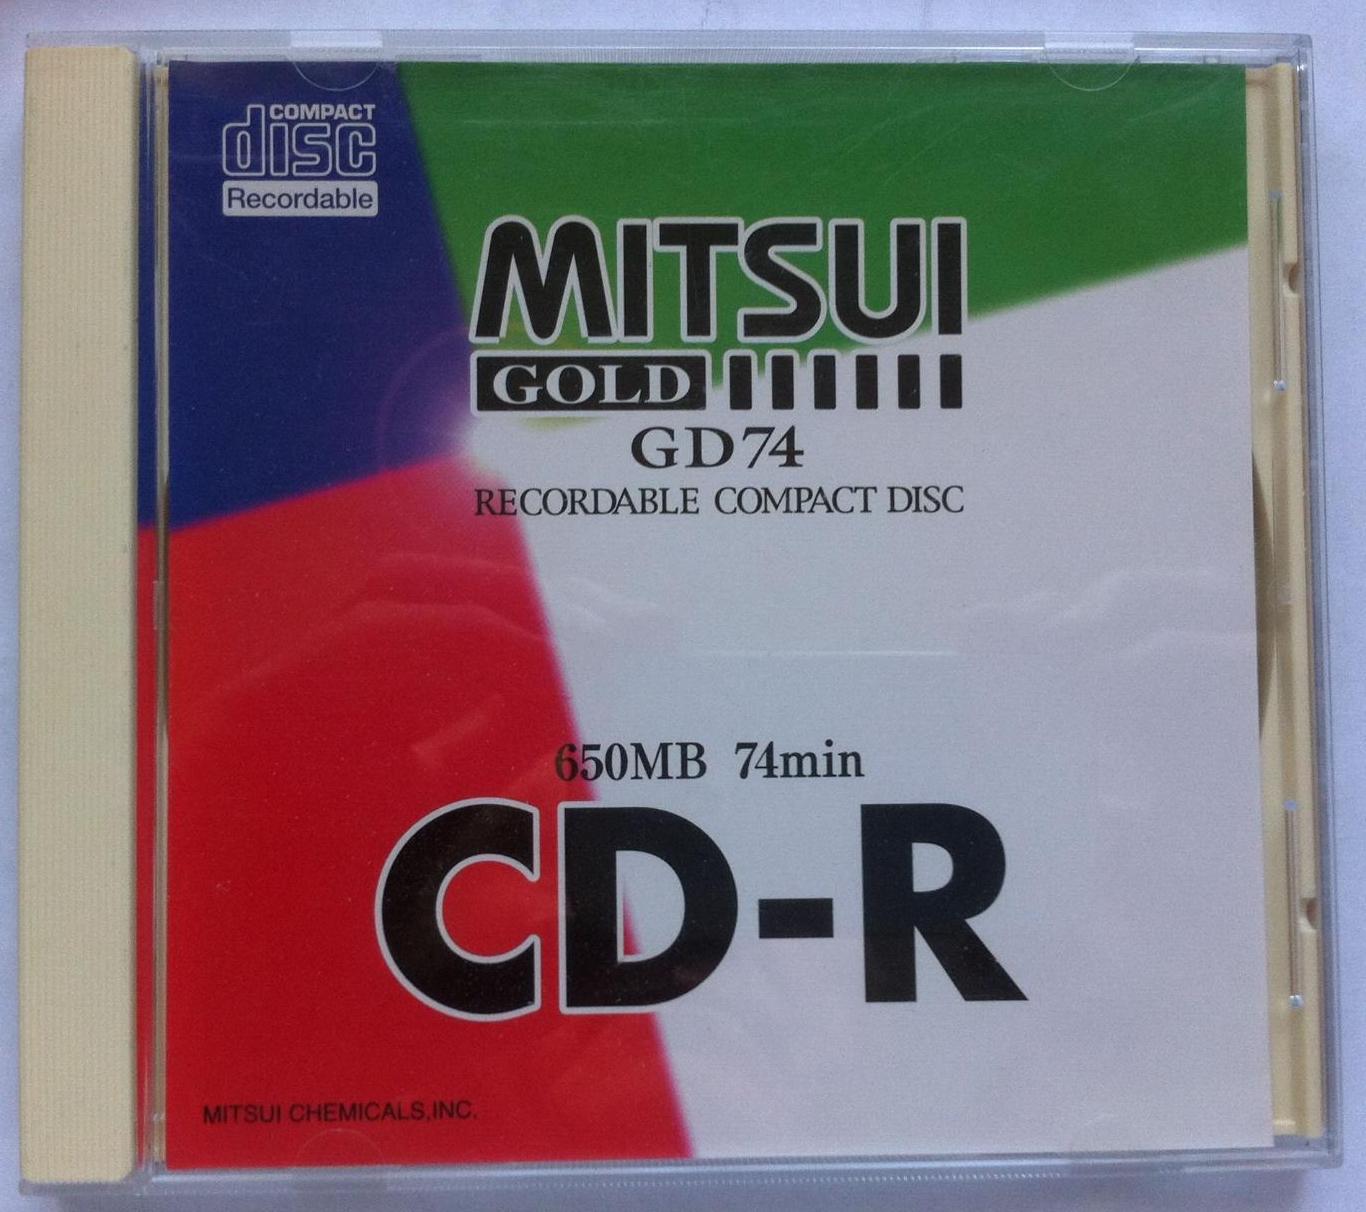 Торпедо Москва. Поездка в Пекин 1999. Компакт-диск CD-R